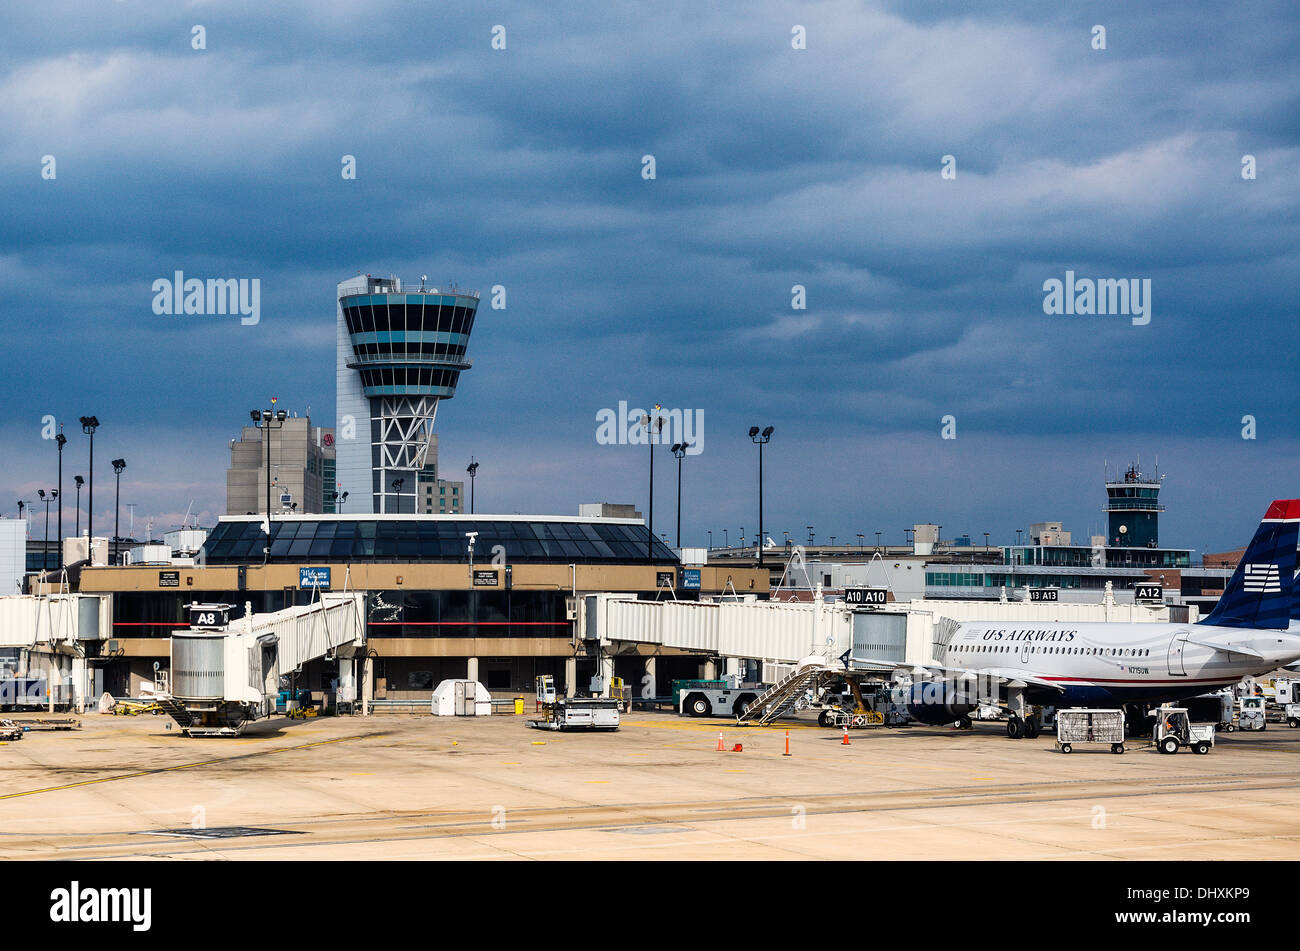 Terminal and control tower at Philadelphia airport, Pennsylvania, USA Stock Photo